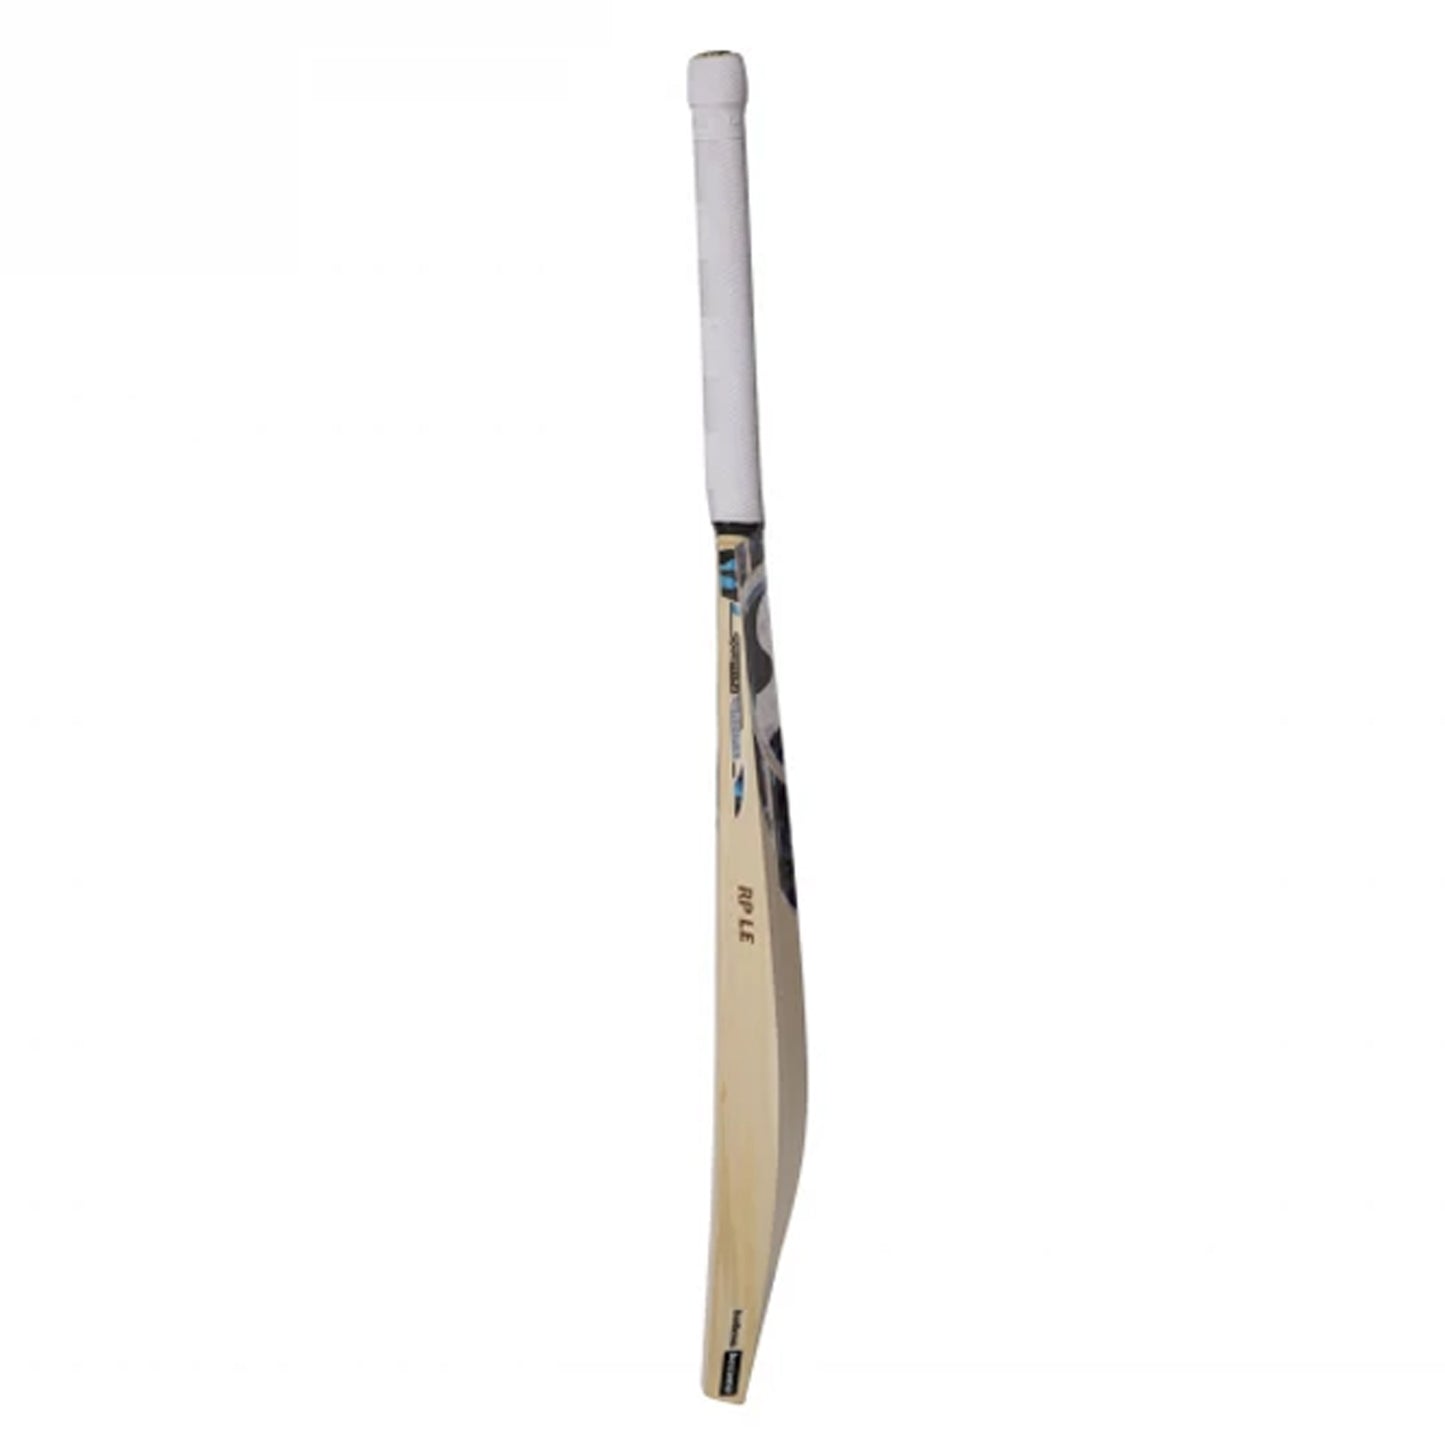 SG RP LE English Willow Cricket Bat - Best Price online Prokicksports.com